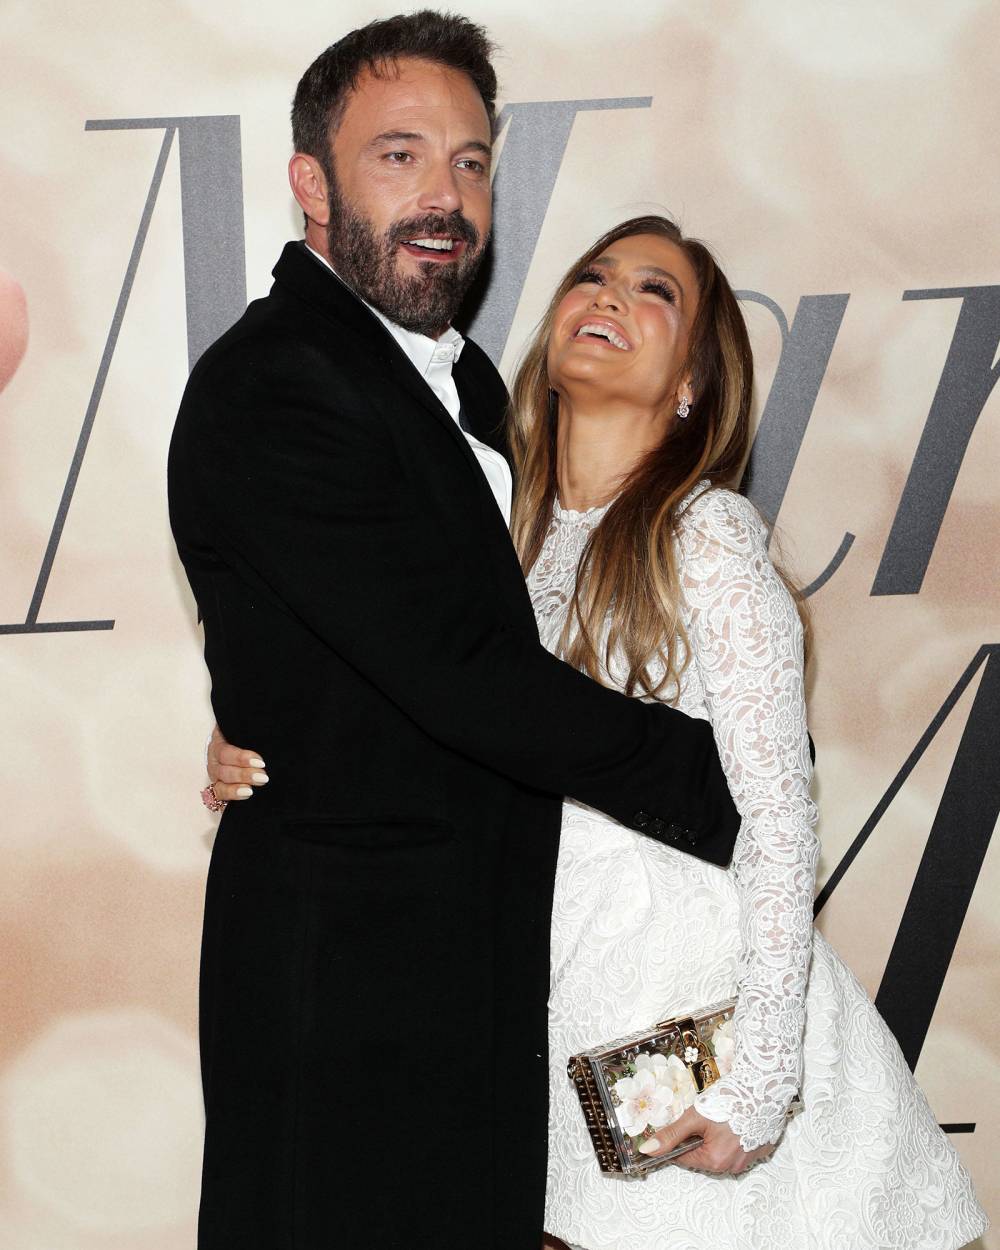 Jennifer Lopez's Gucci Attaché Bag Is A Celebrity Favorite